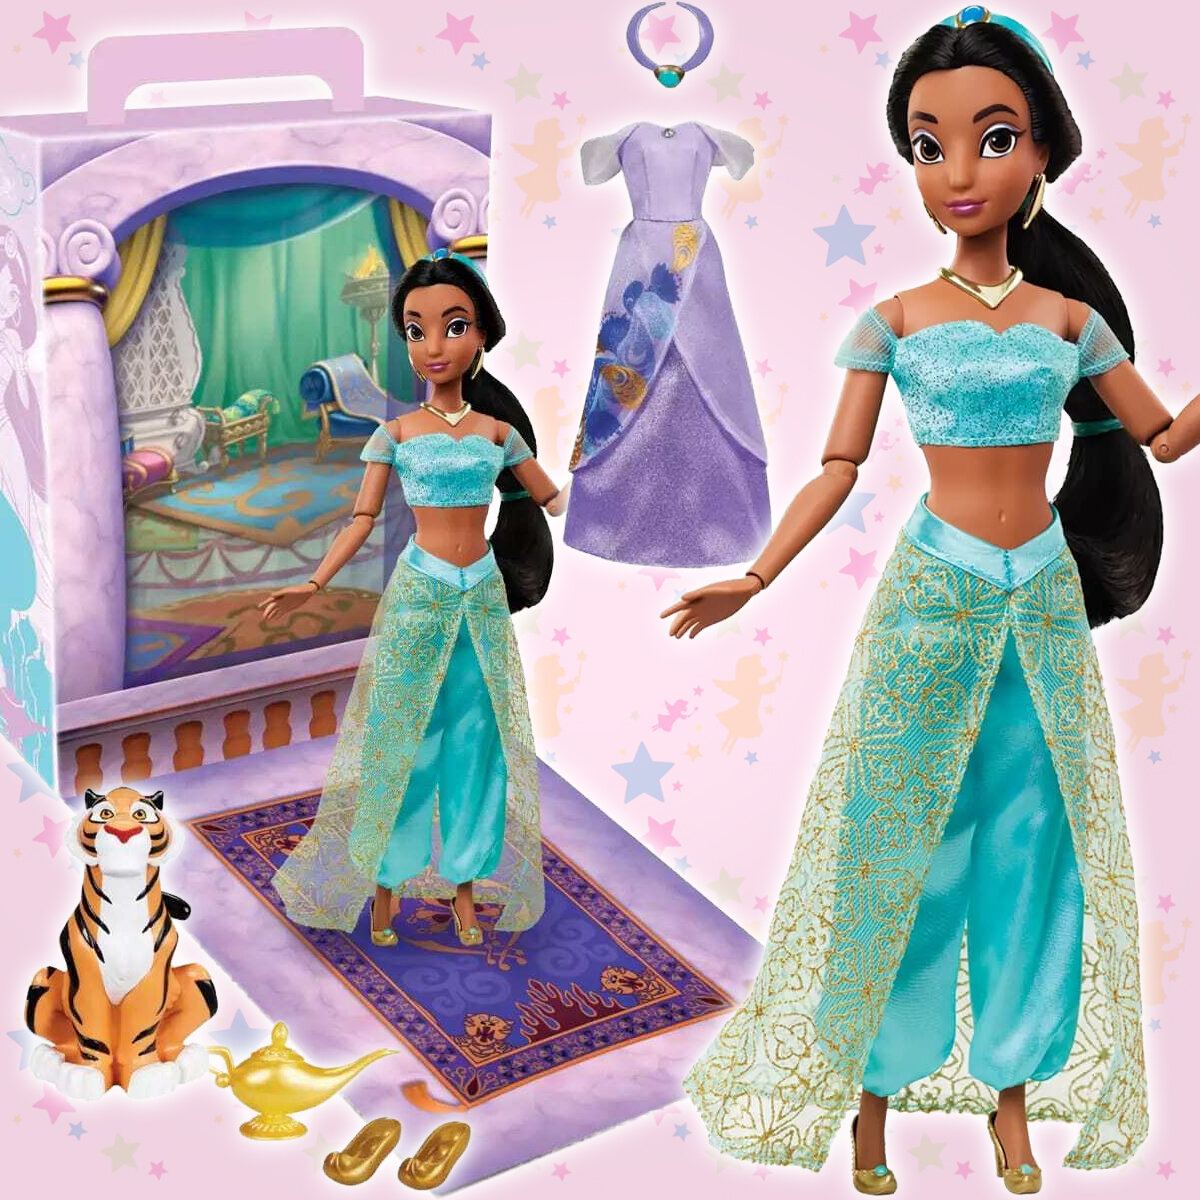 Кукла Жасмин Принцесса коллекция Приключения Аладдина Disney Story